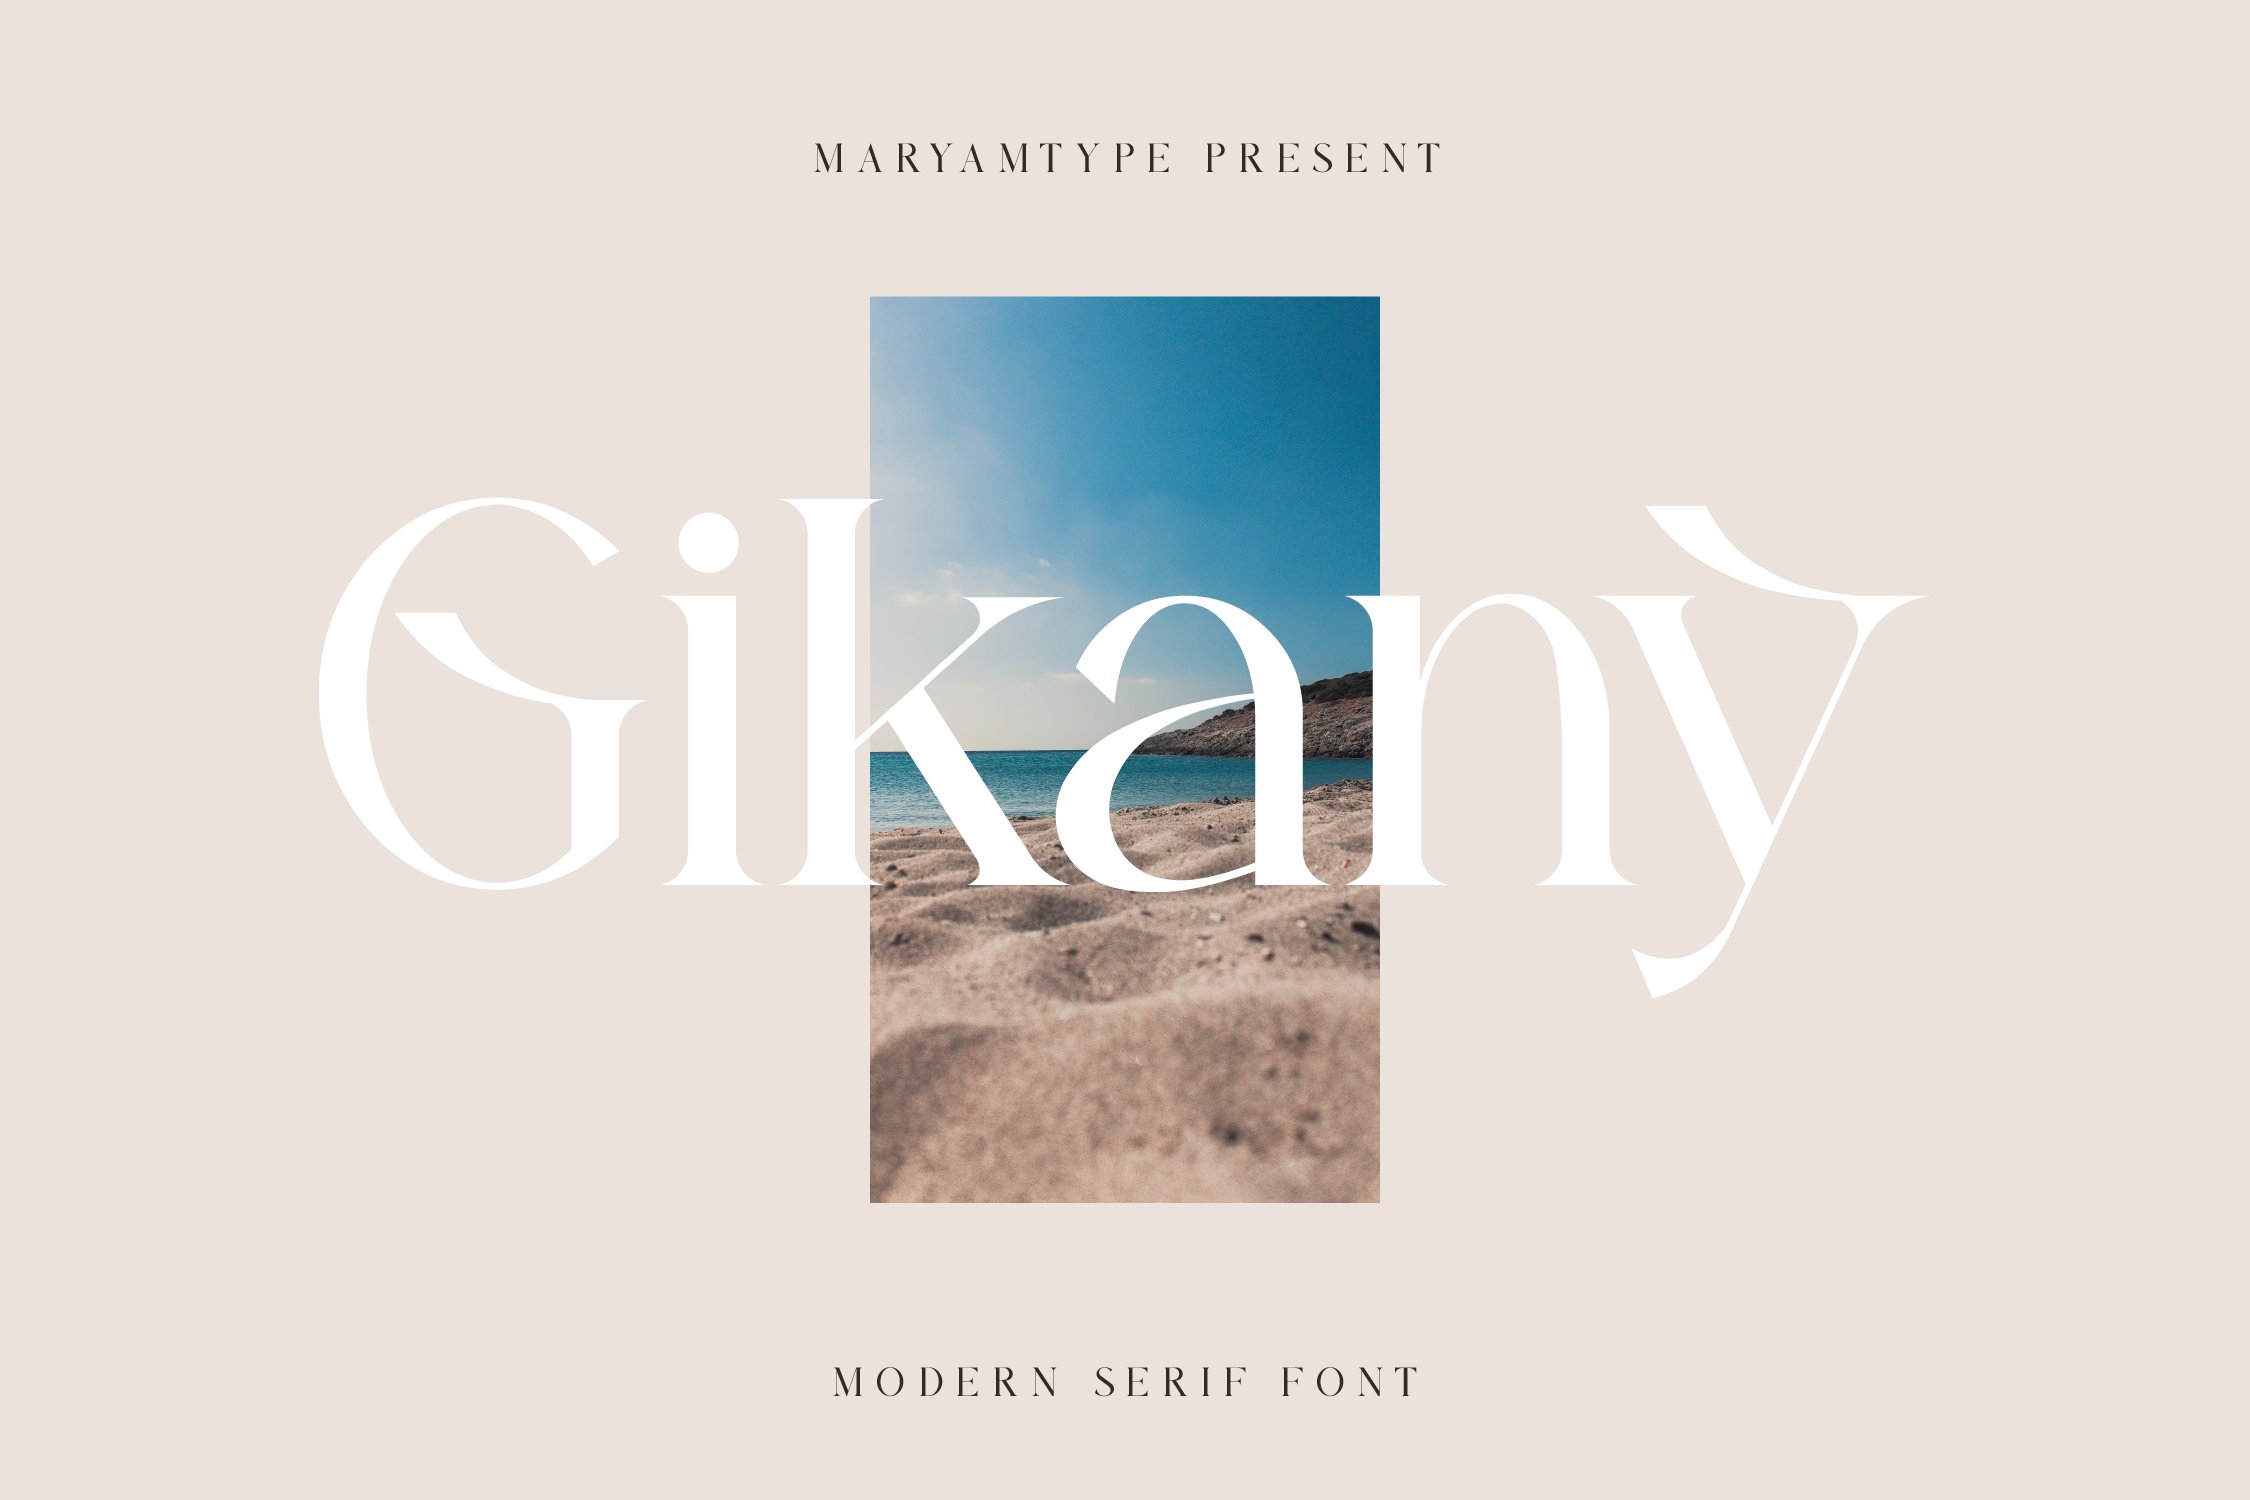 Gikany Modern Serif cover image.